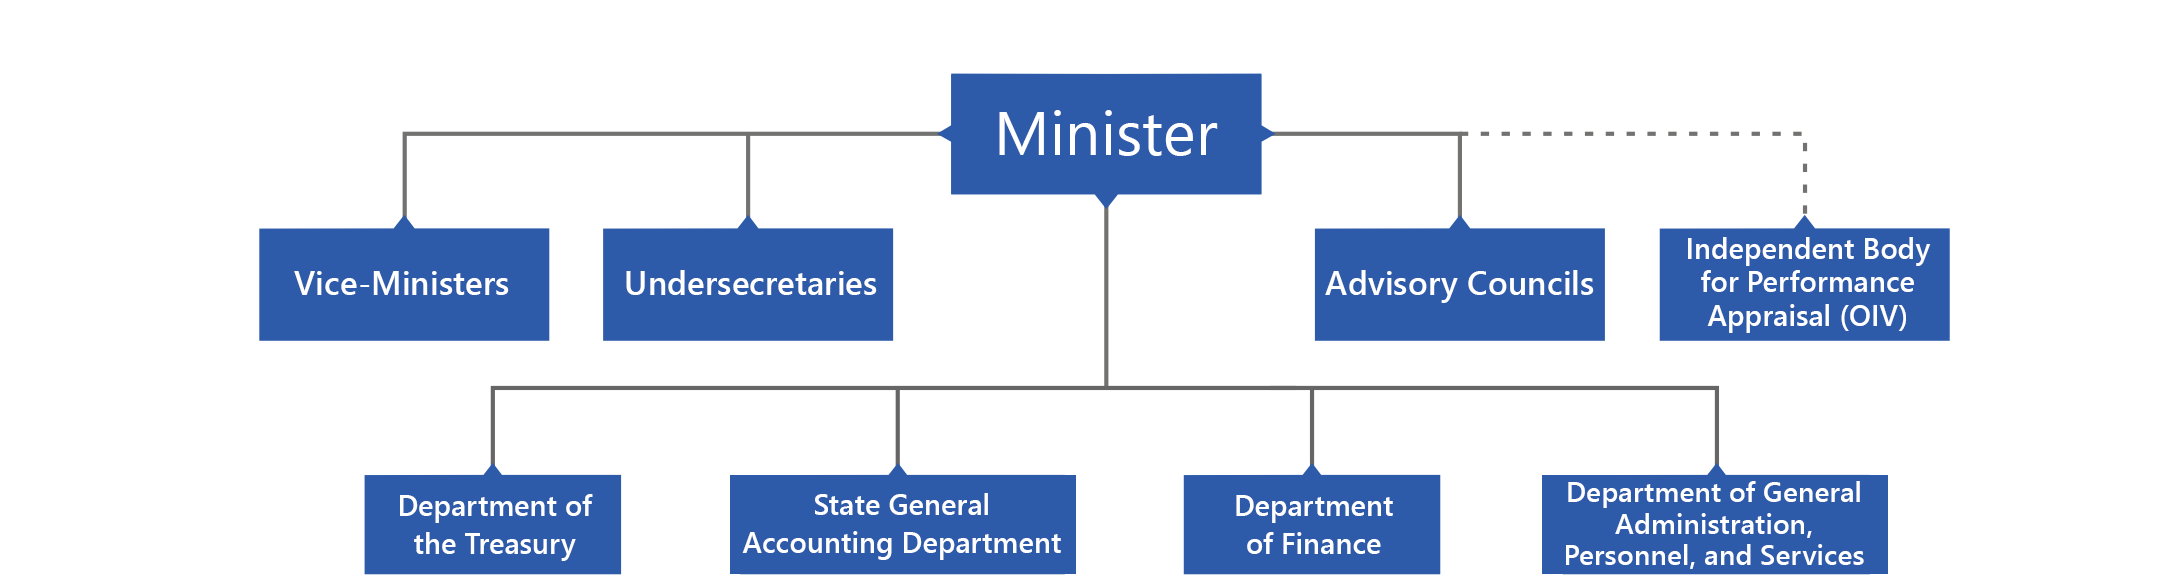 State Department Organizational Chart